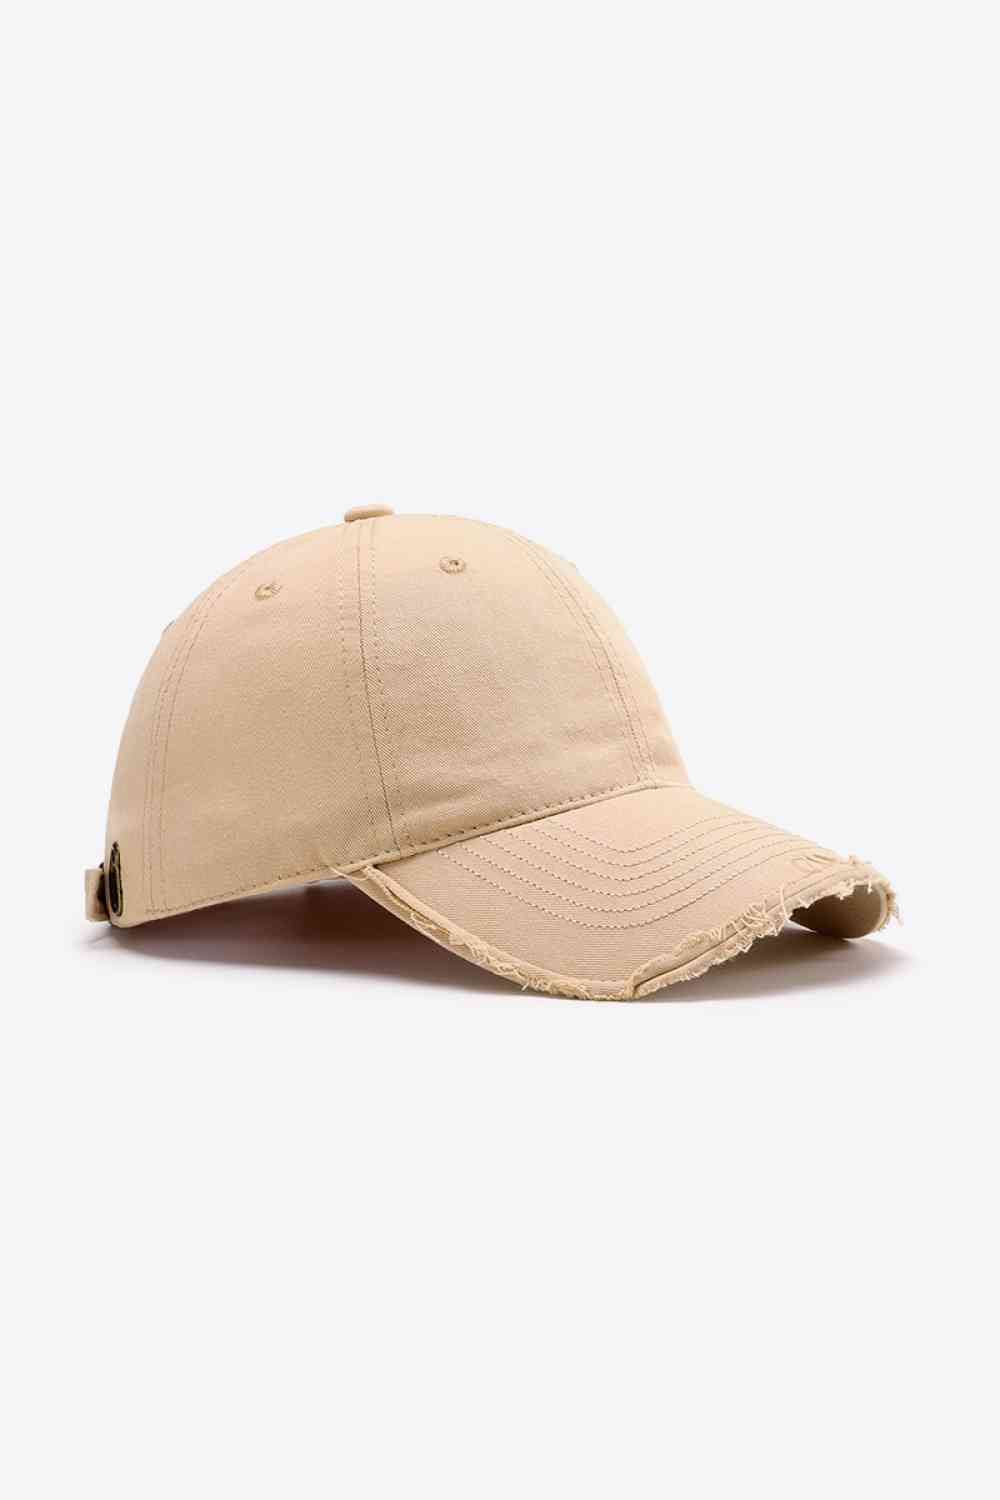 Distressed Adjustable Baseball Cap Cream One Size